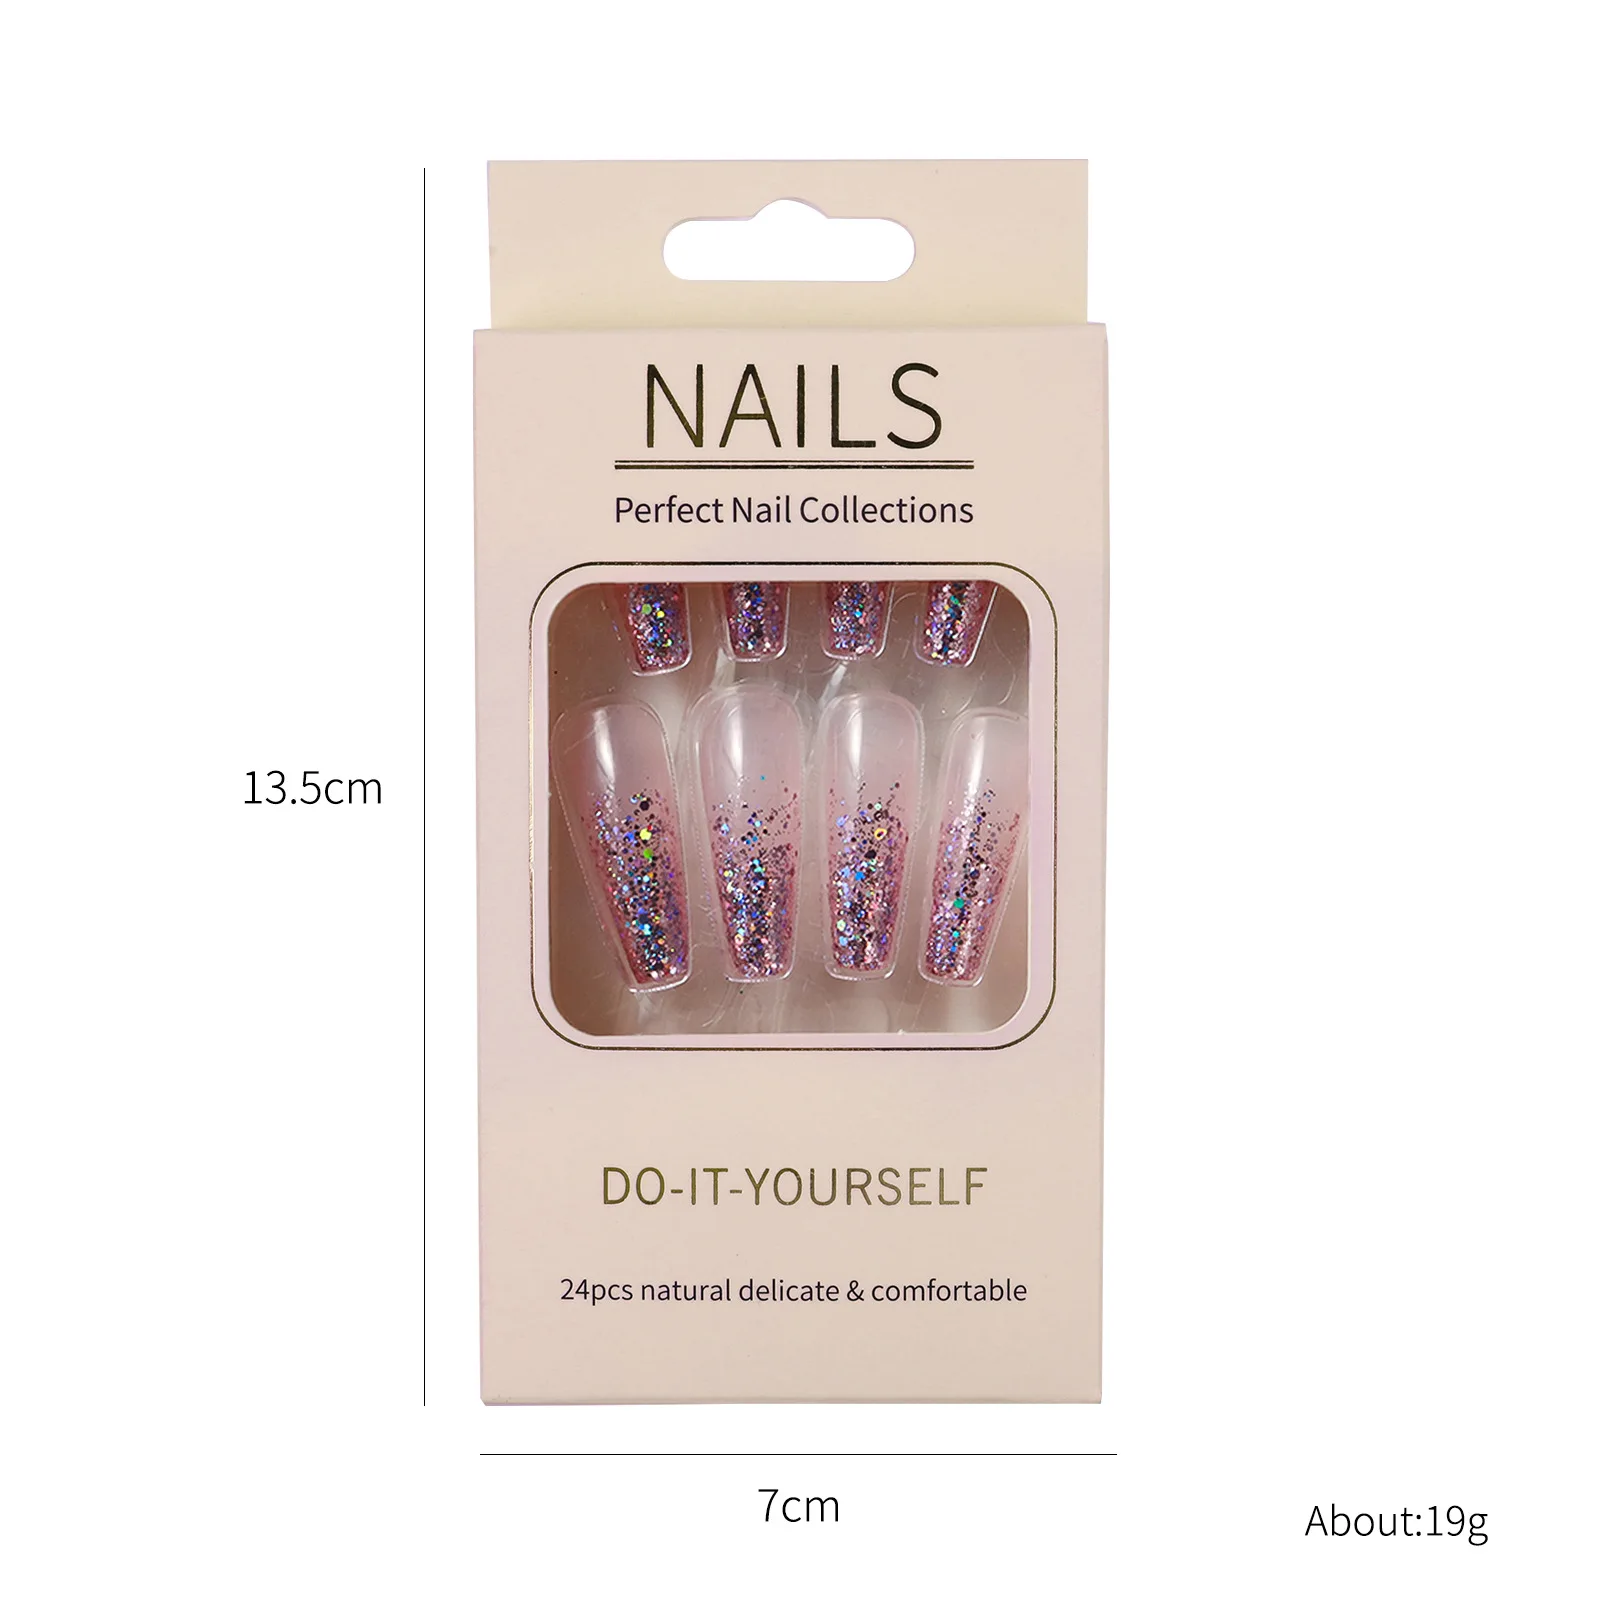 

Hot 24 Pcs Acrylic Custom False Artificial Fingernails Long Ballet Coffin Nail Tips Bling Press On Nails Tip, Picture show